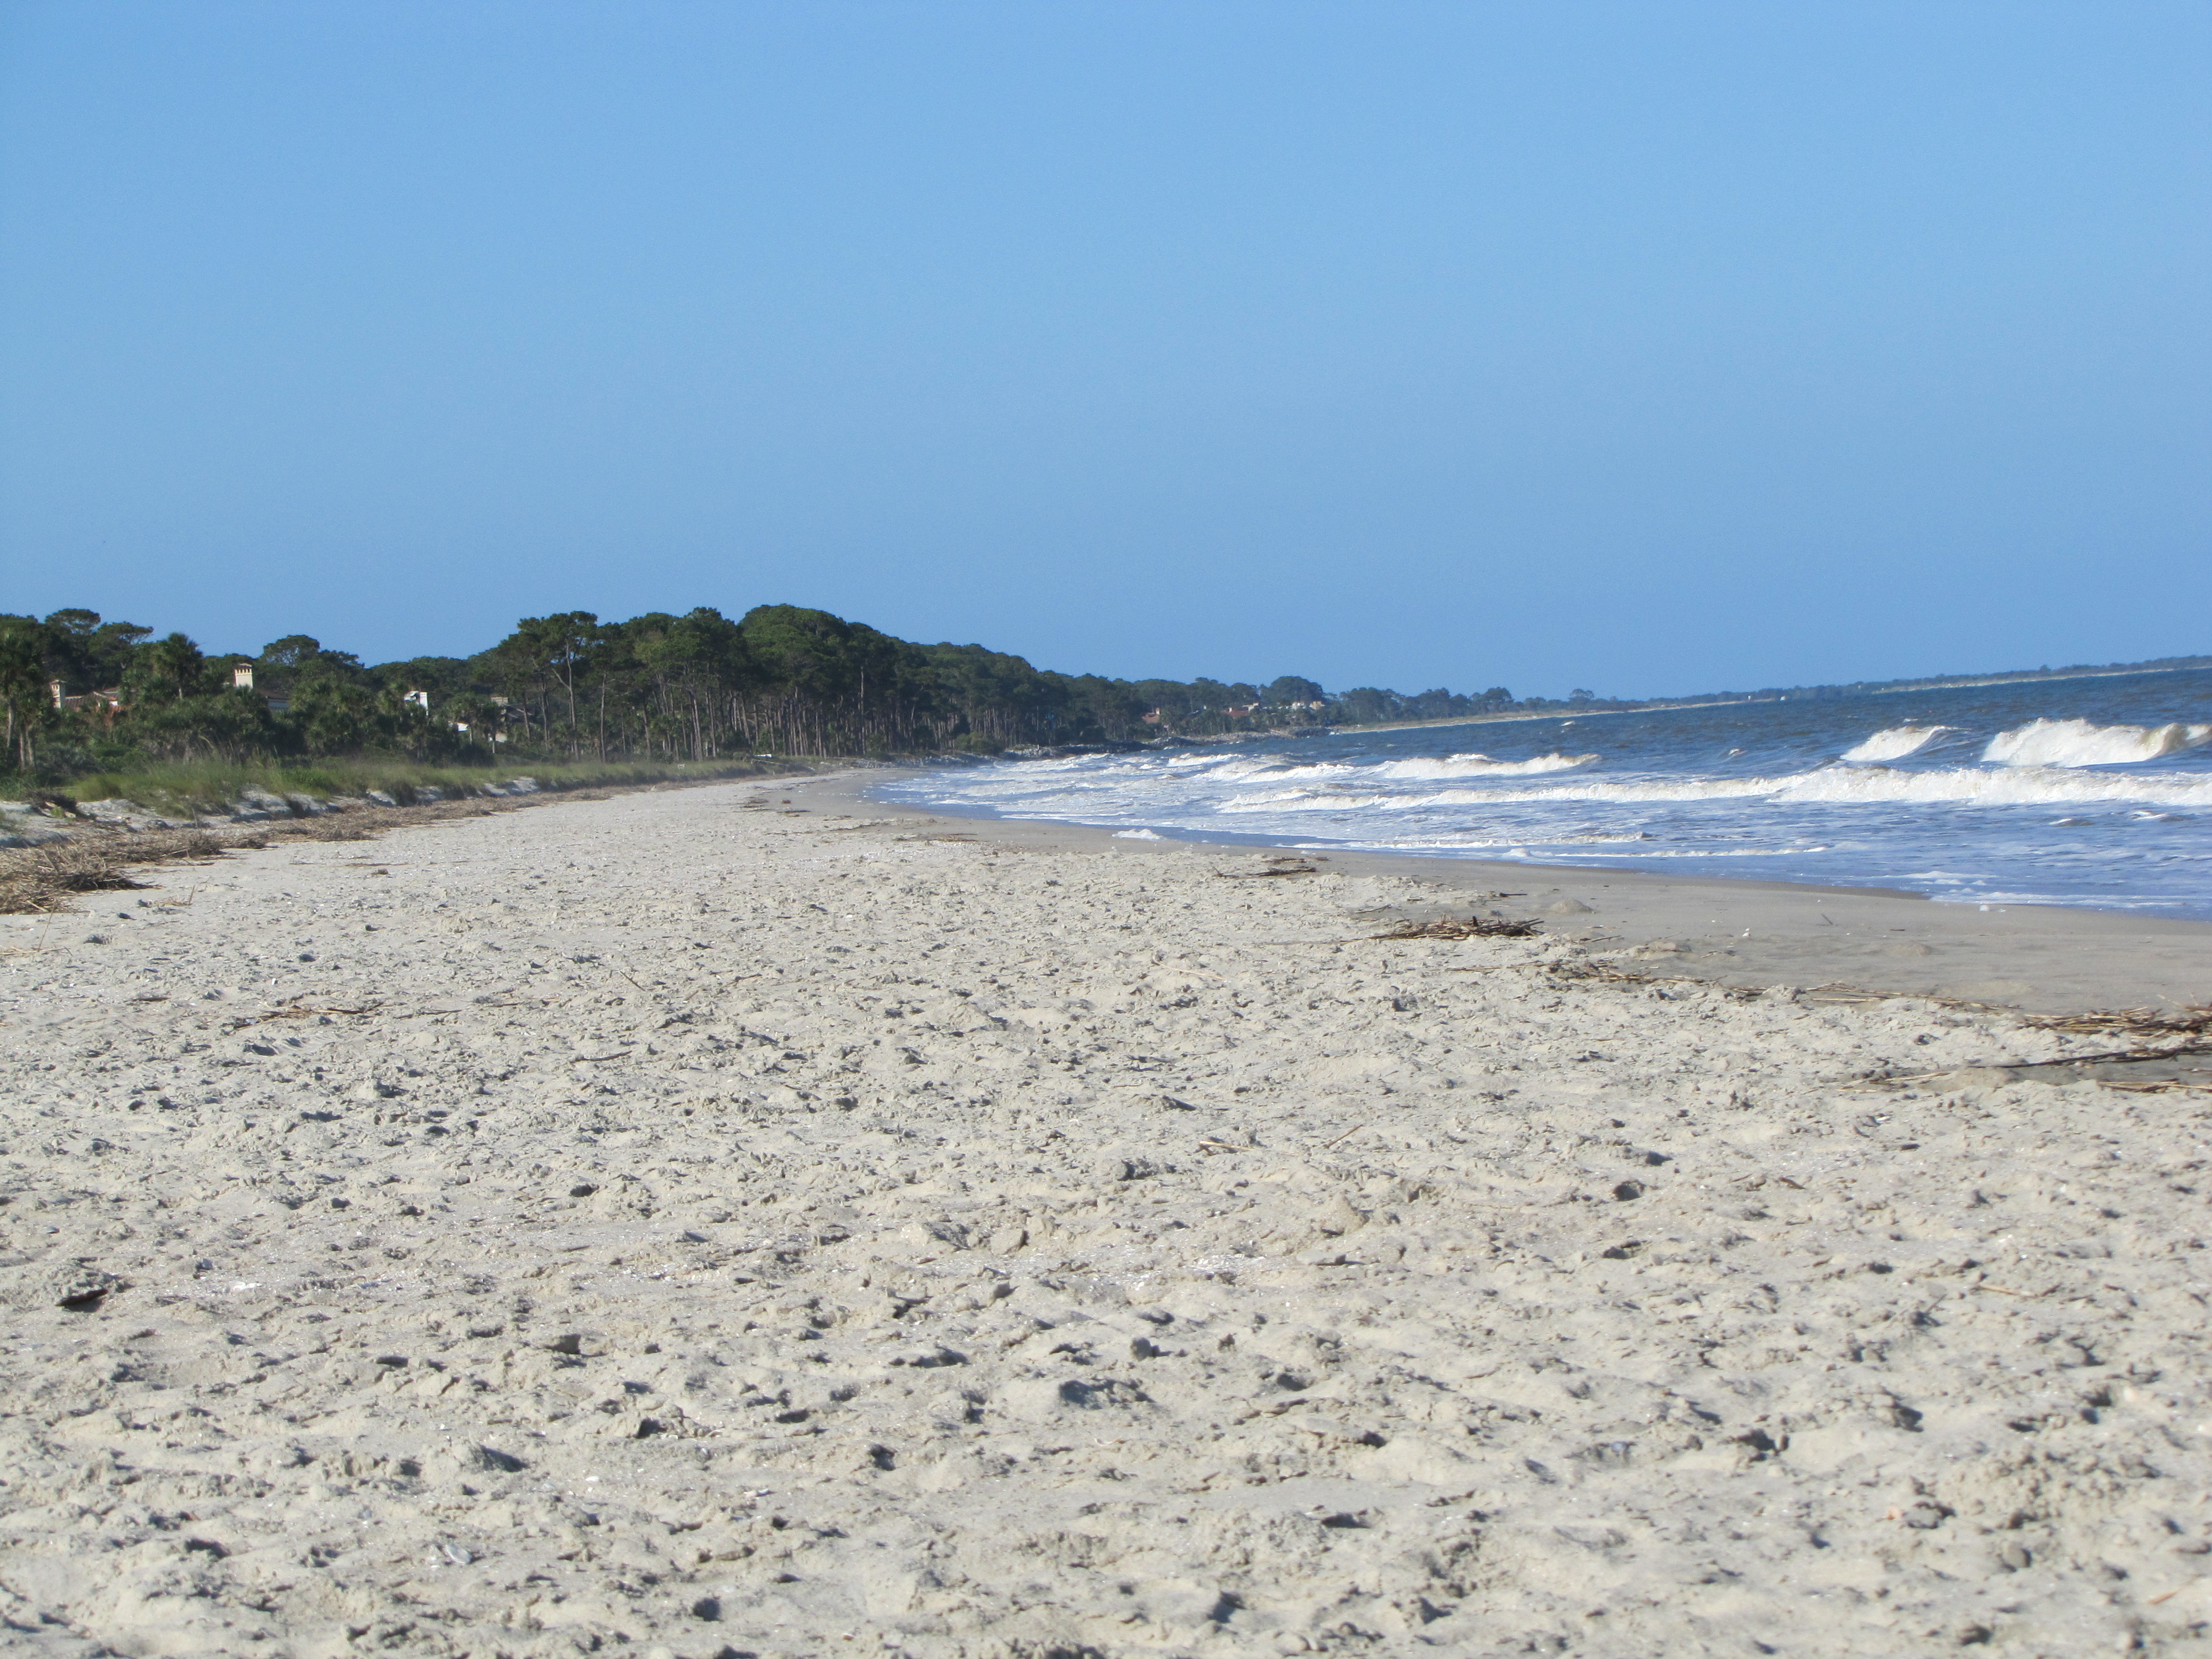 photograph of beach scene